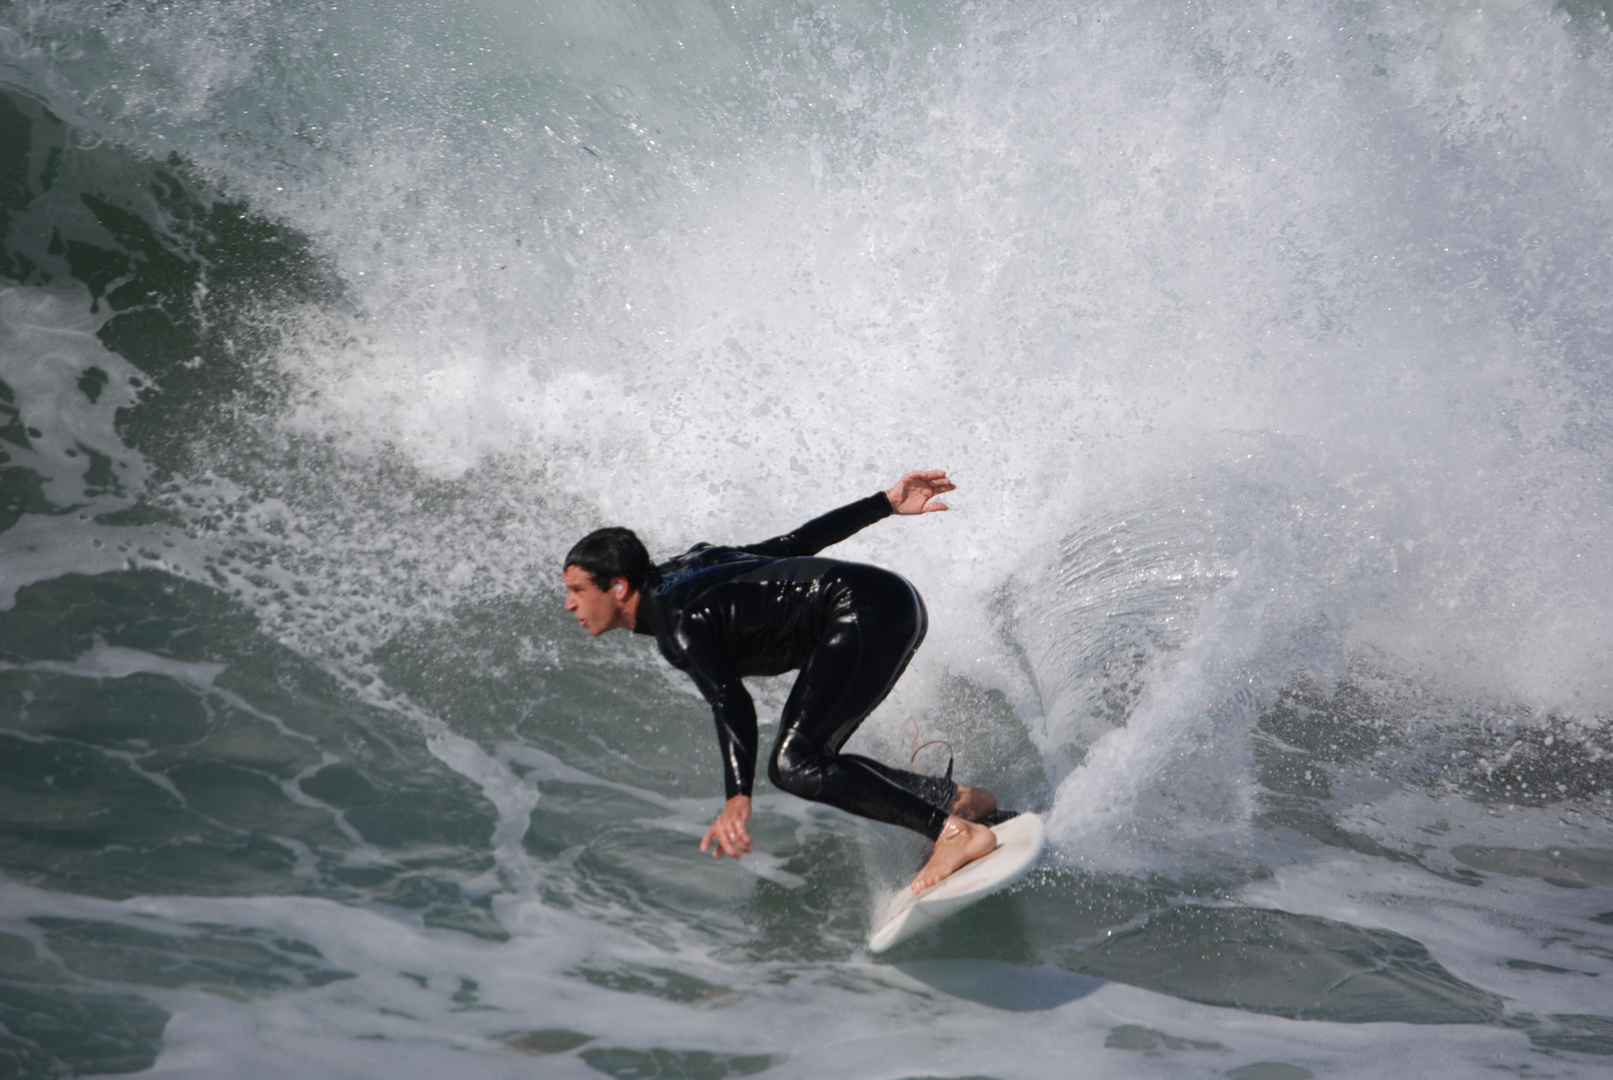 Surfing Californ-i-a 2